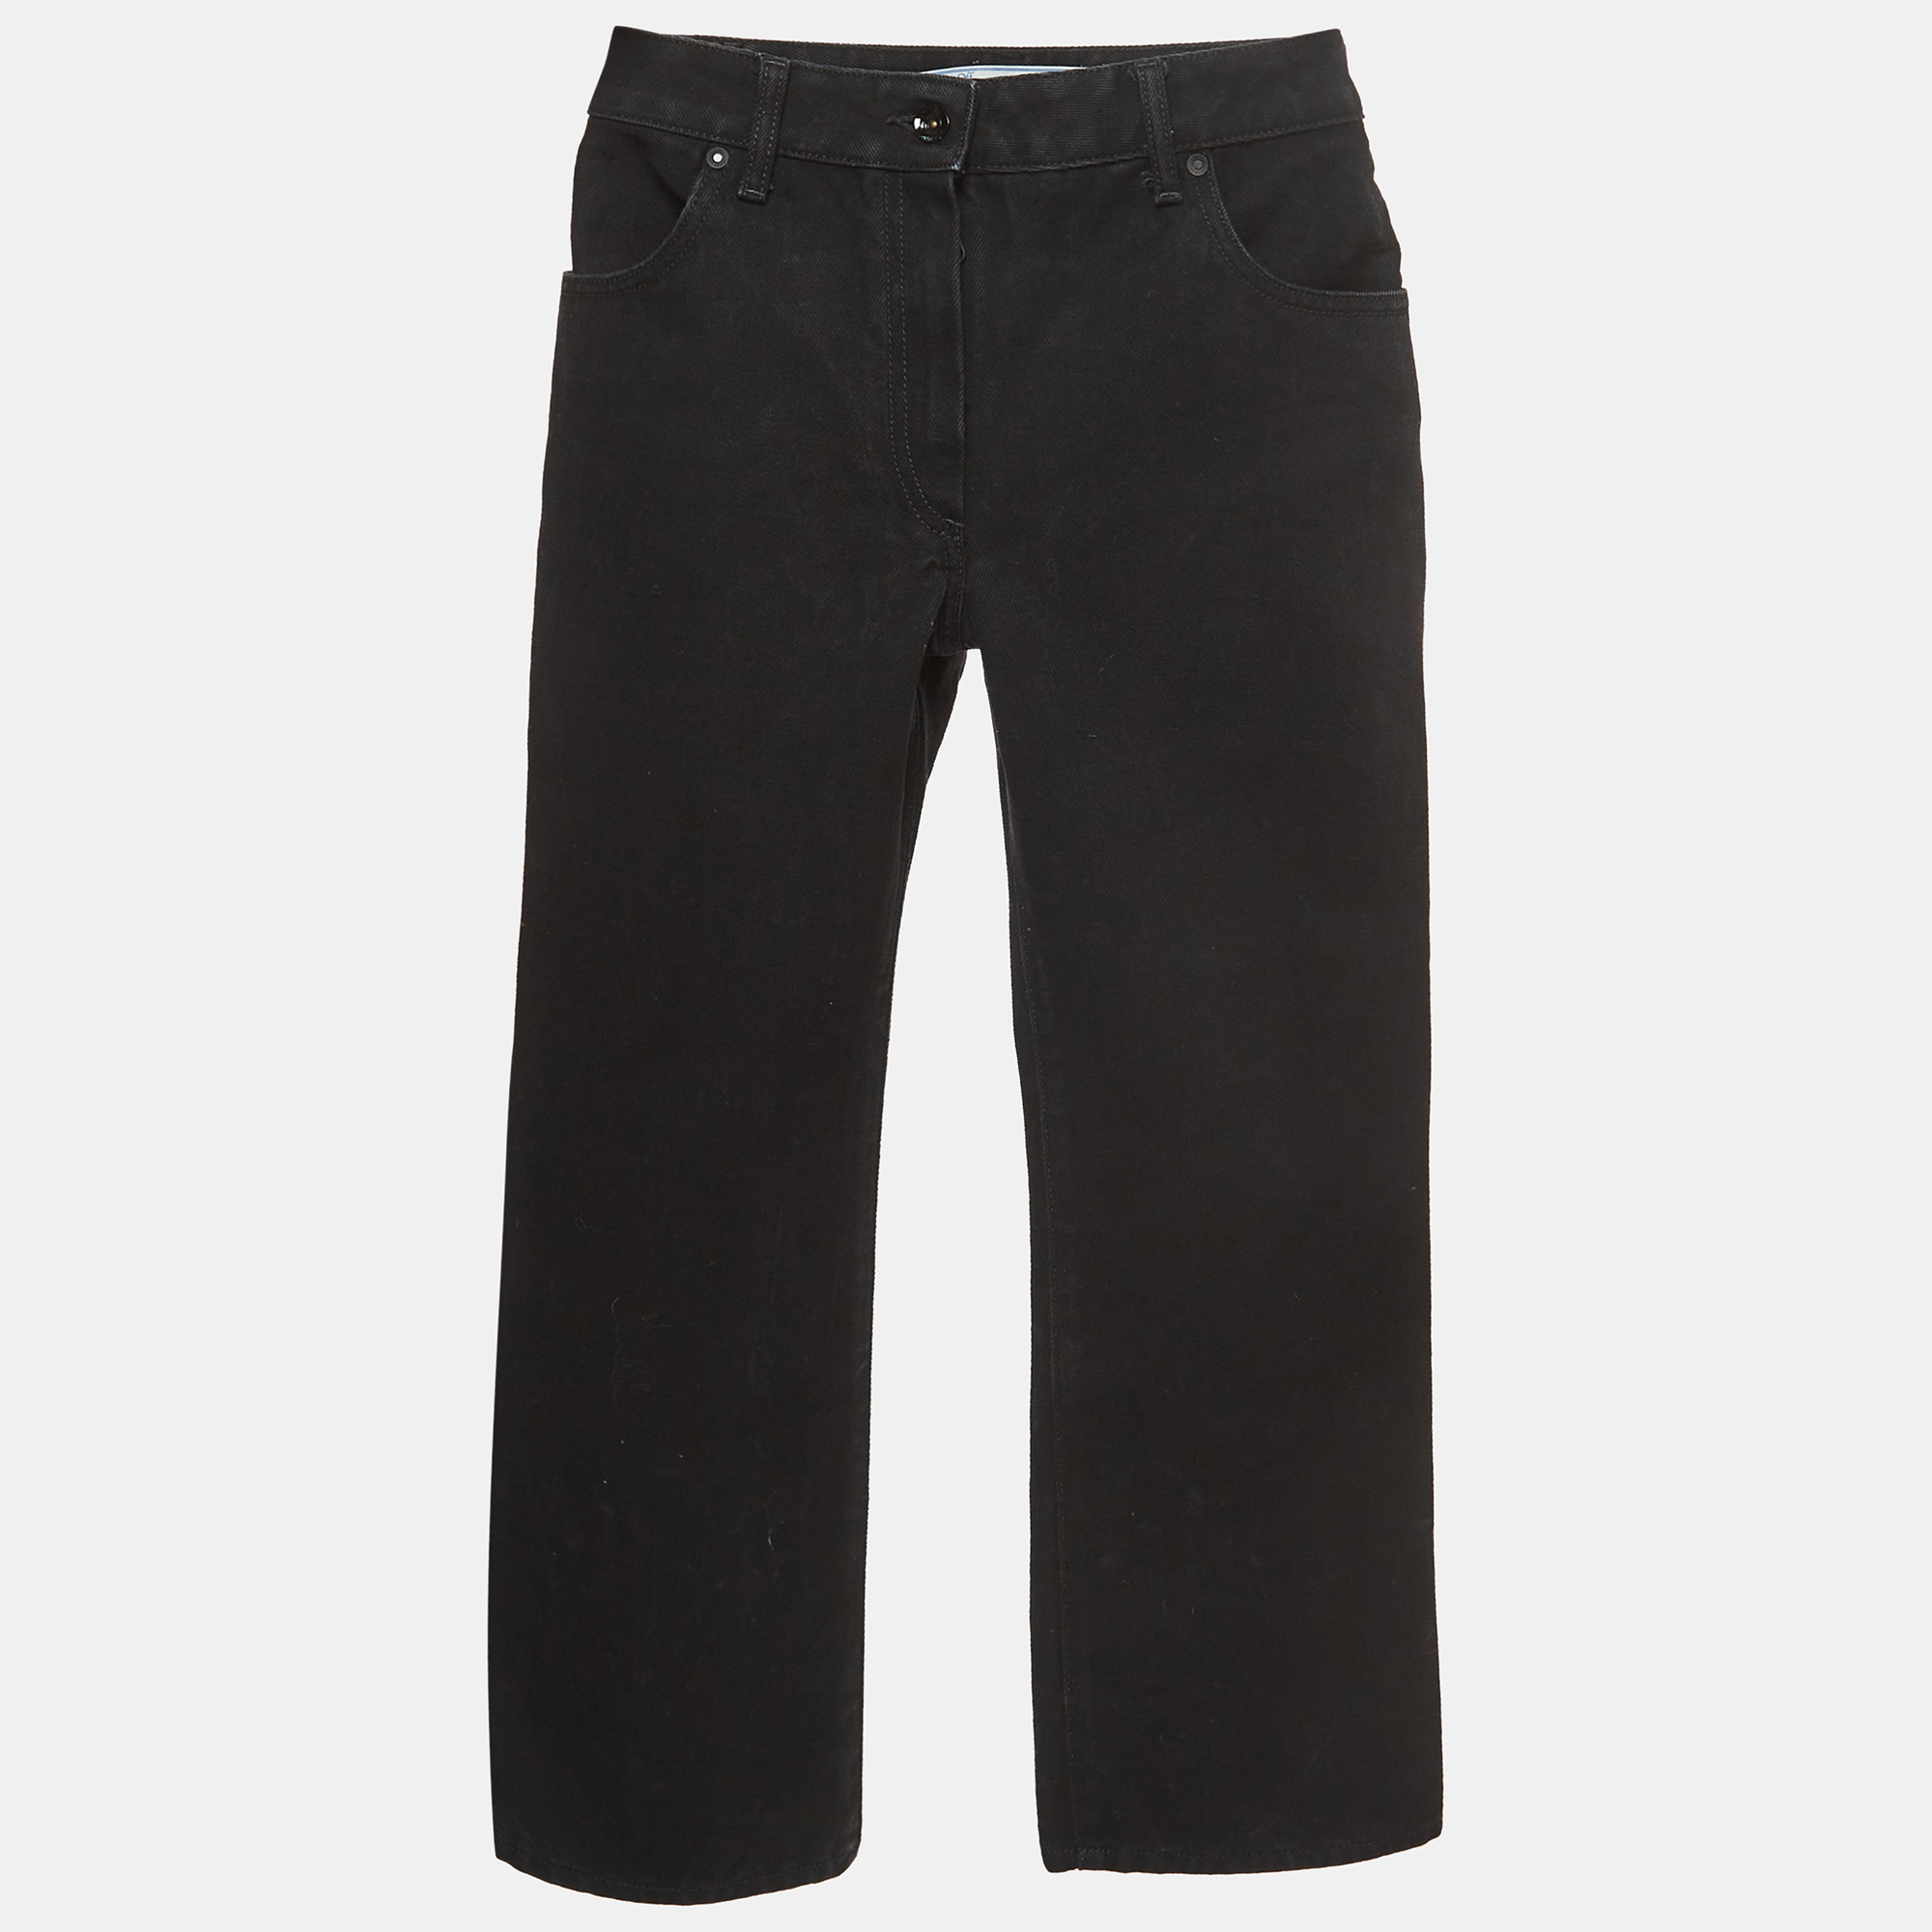 Pre-owned Off-white Black Diagonal Striped Denim High Waist Jeans S Waist 24"